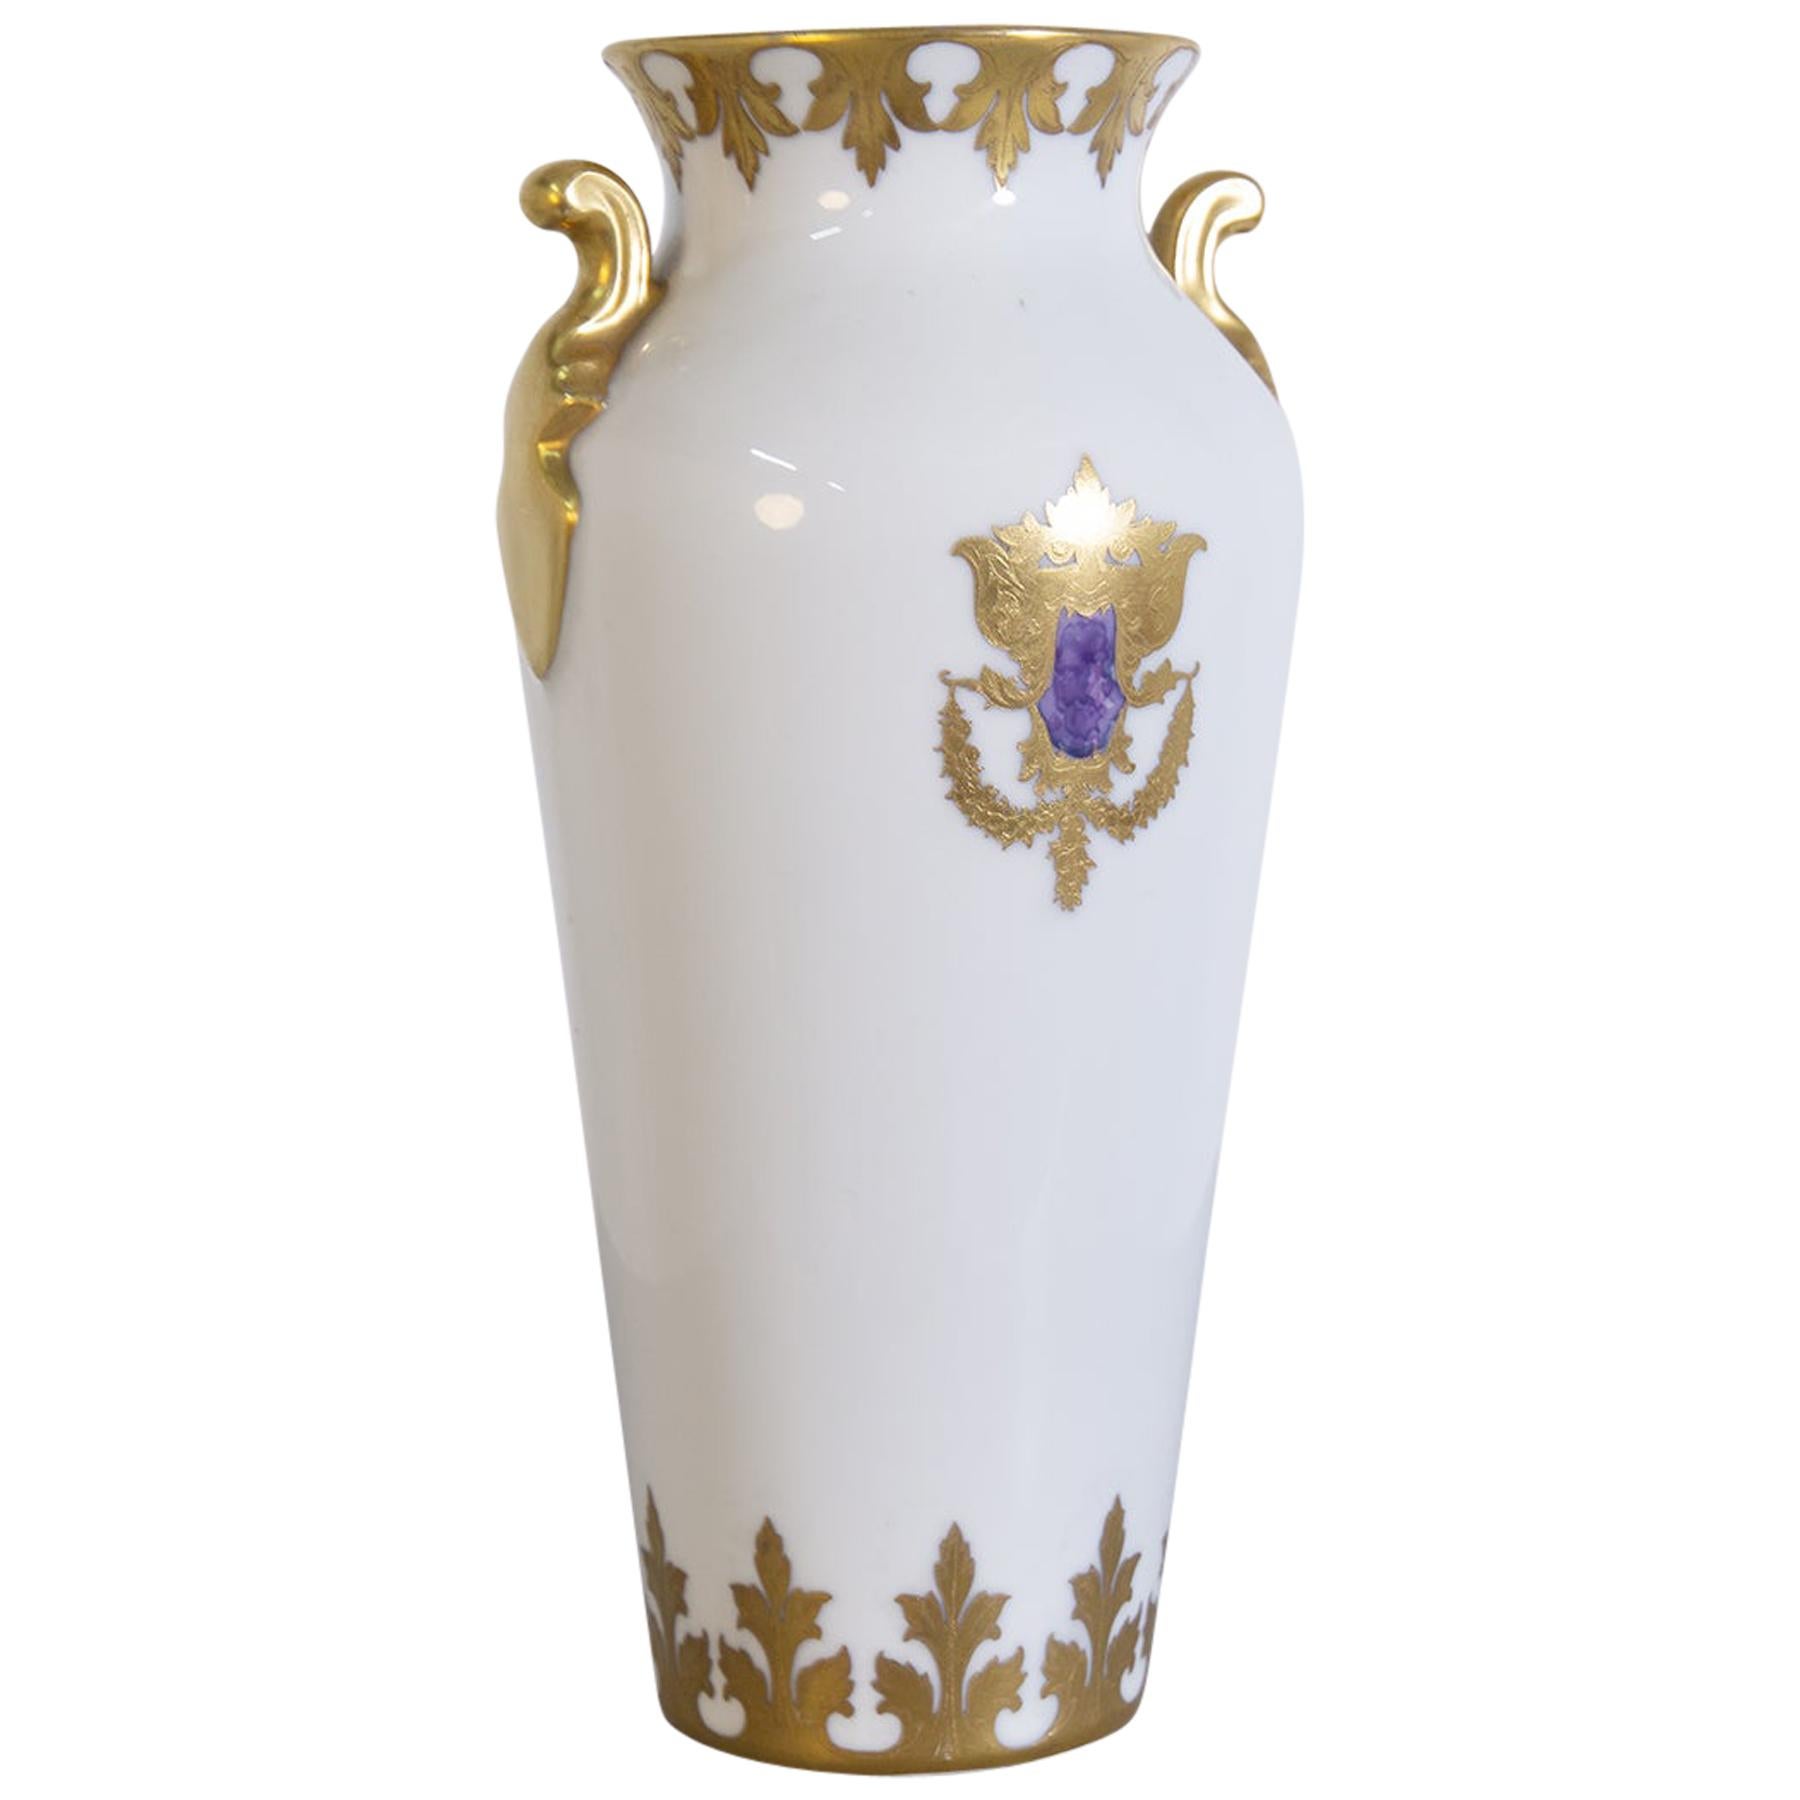 Arrigo Finzi Vase in Porcelain, Gold Painted, Original Label